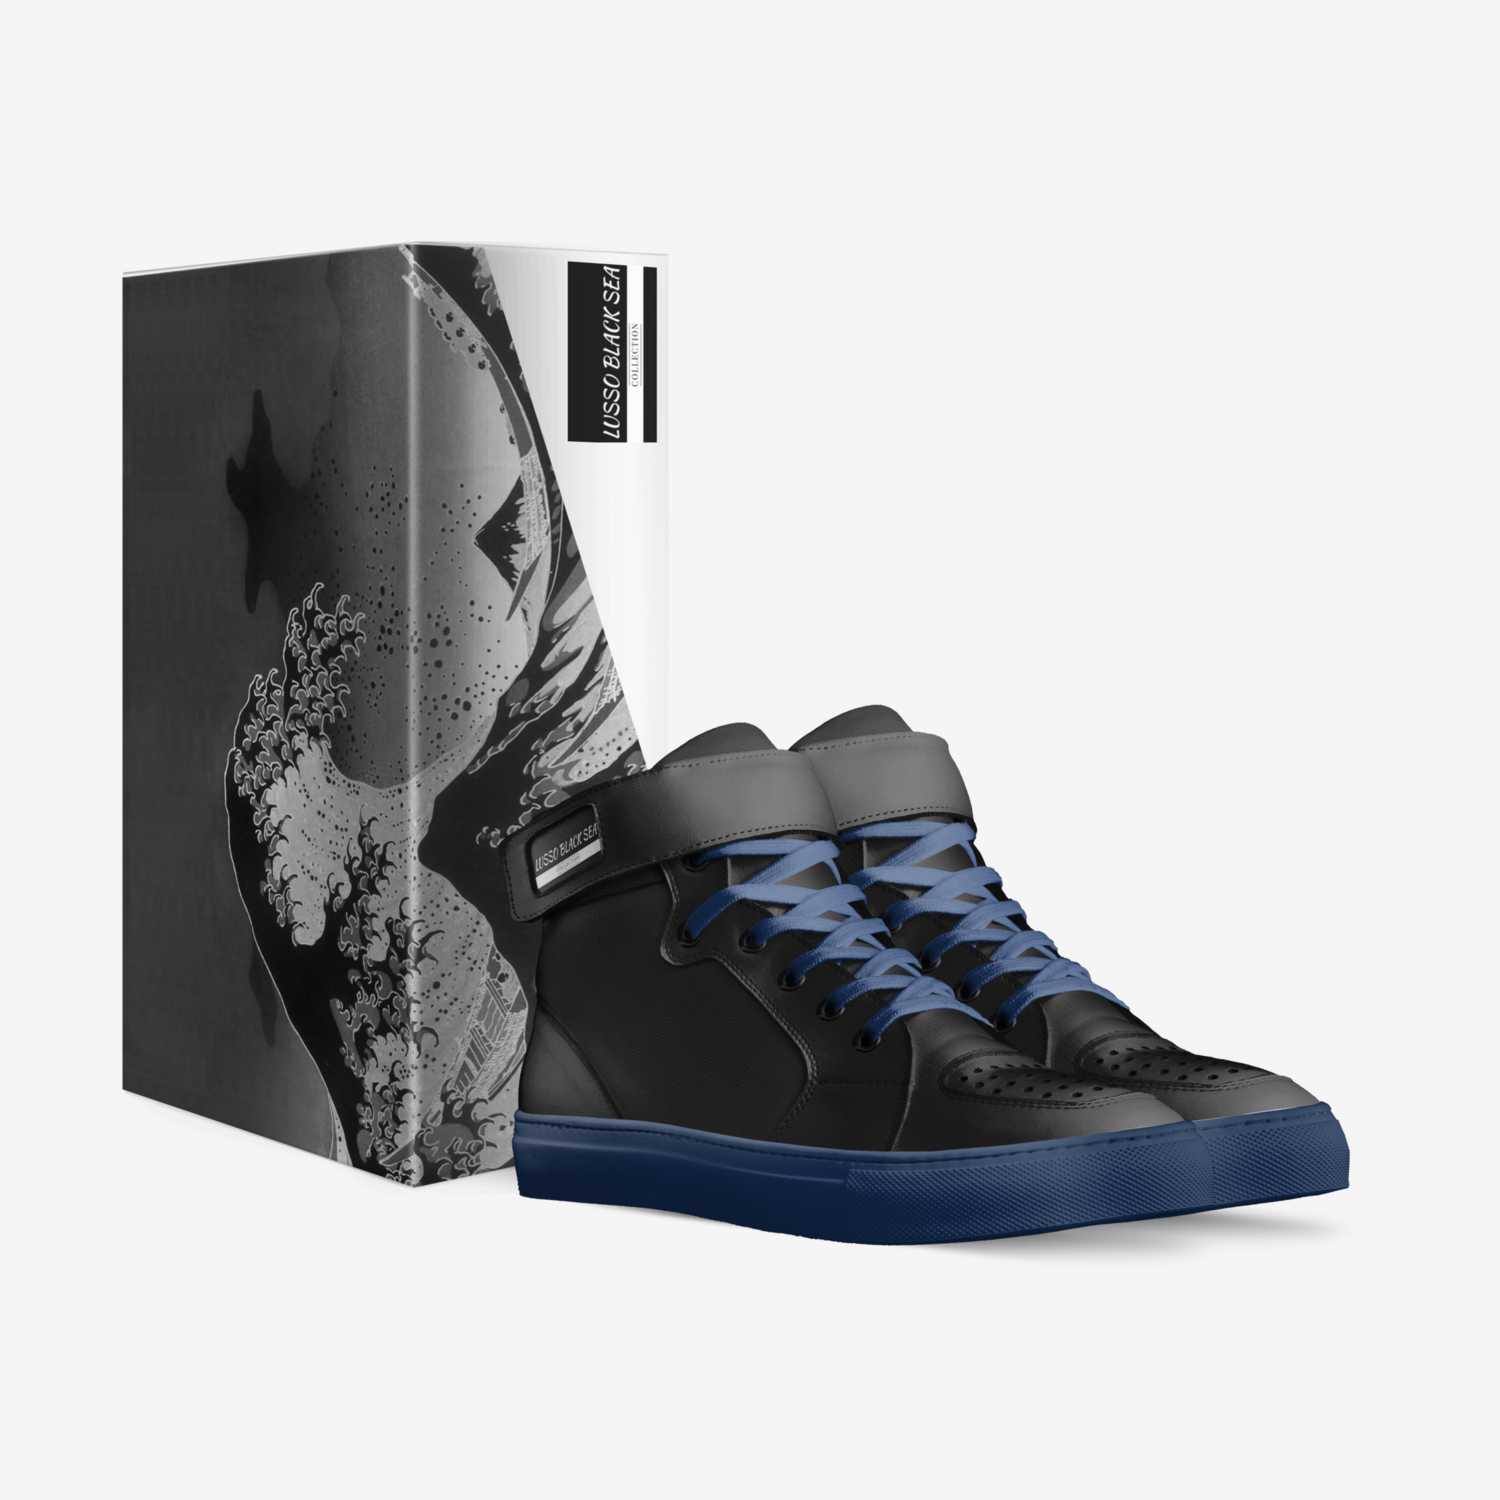 LUSSO BLACK SEA custom made in Italy shoes by Naseeb Ellahi | Box view